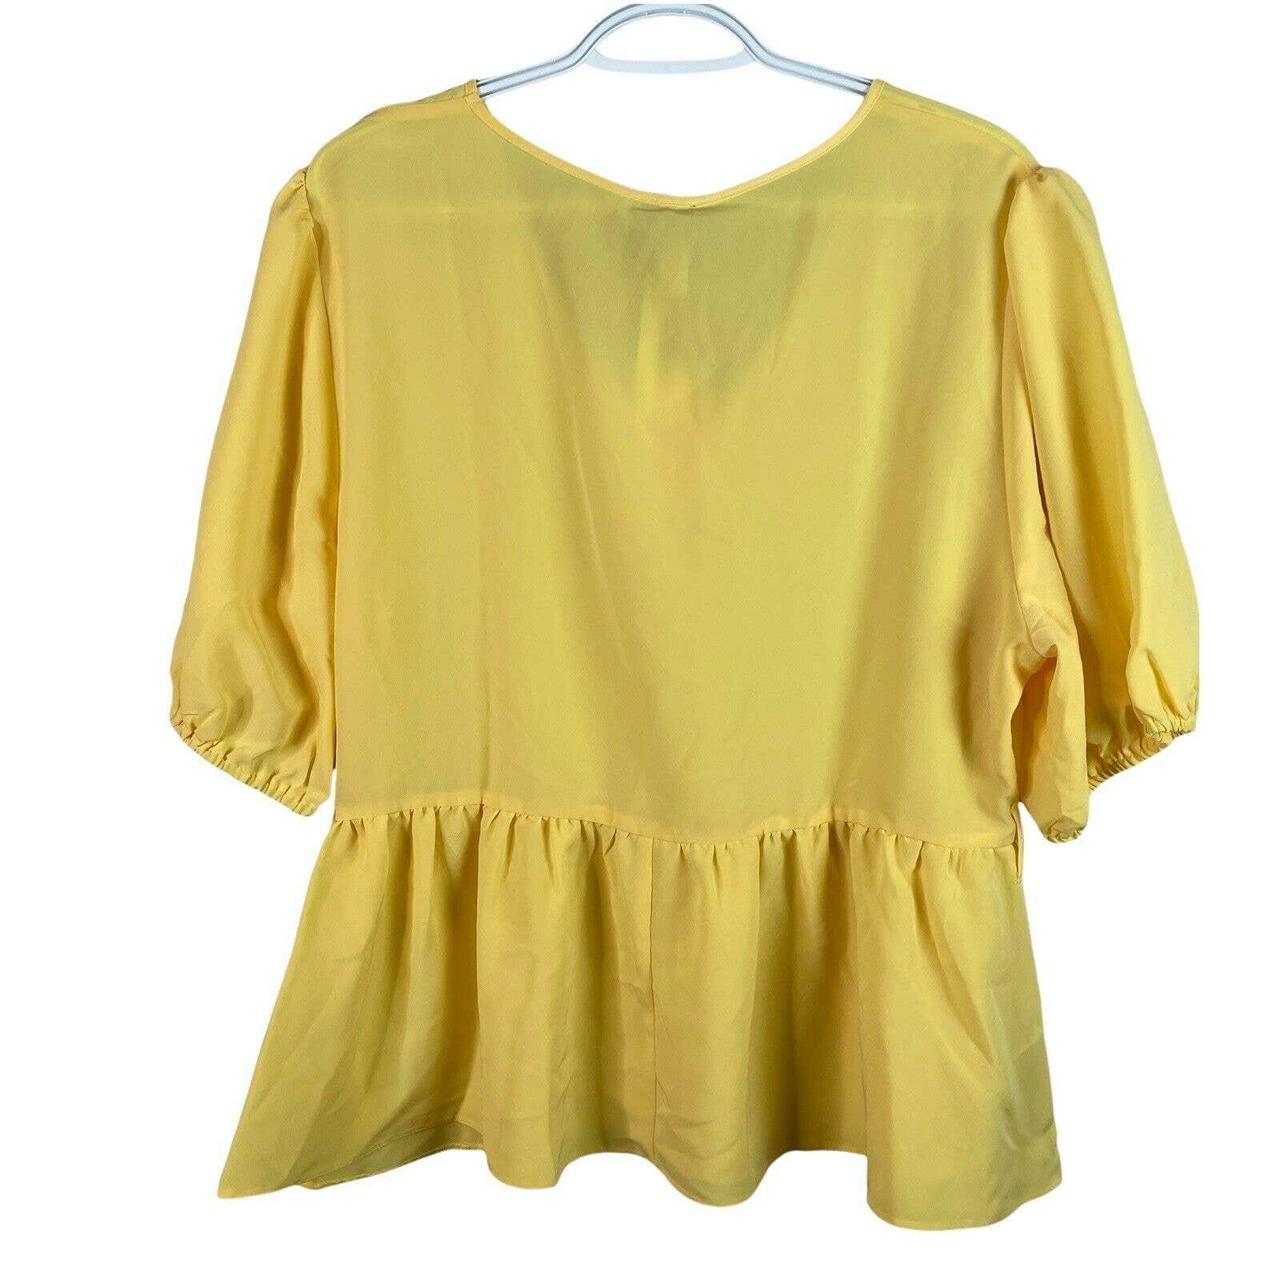 ASOS Women's Yellow Blouse (2)